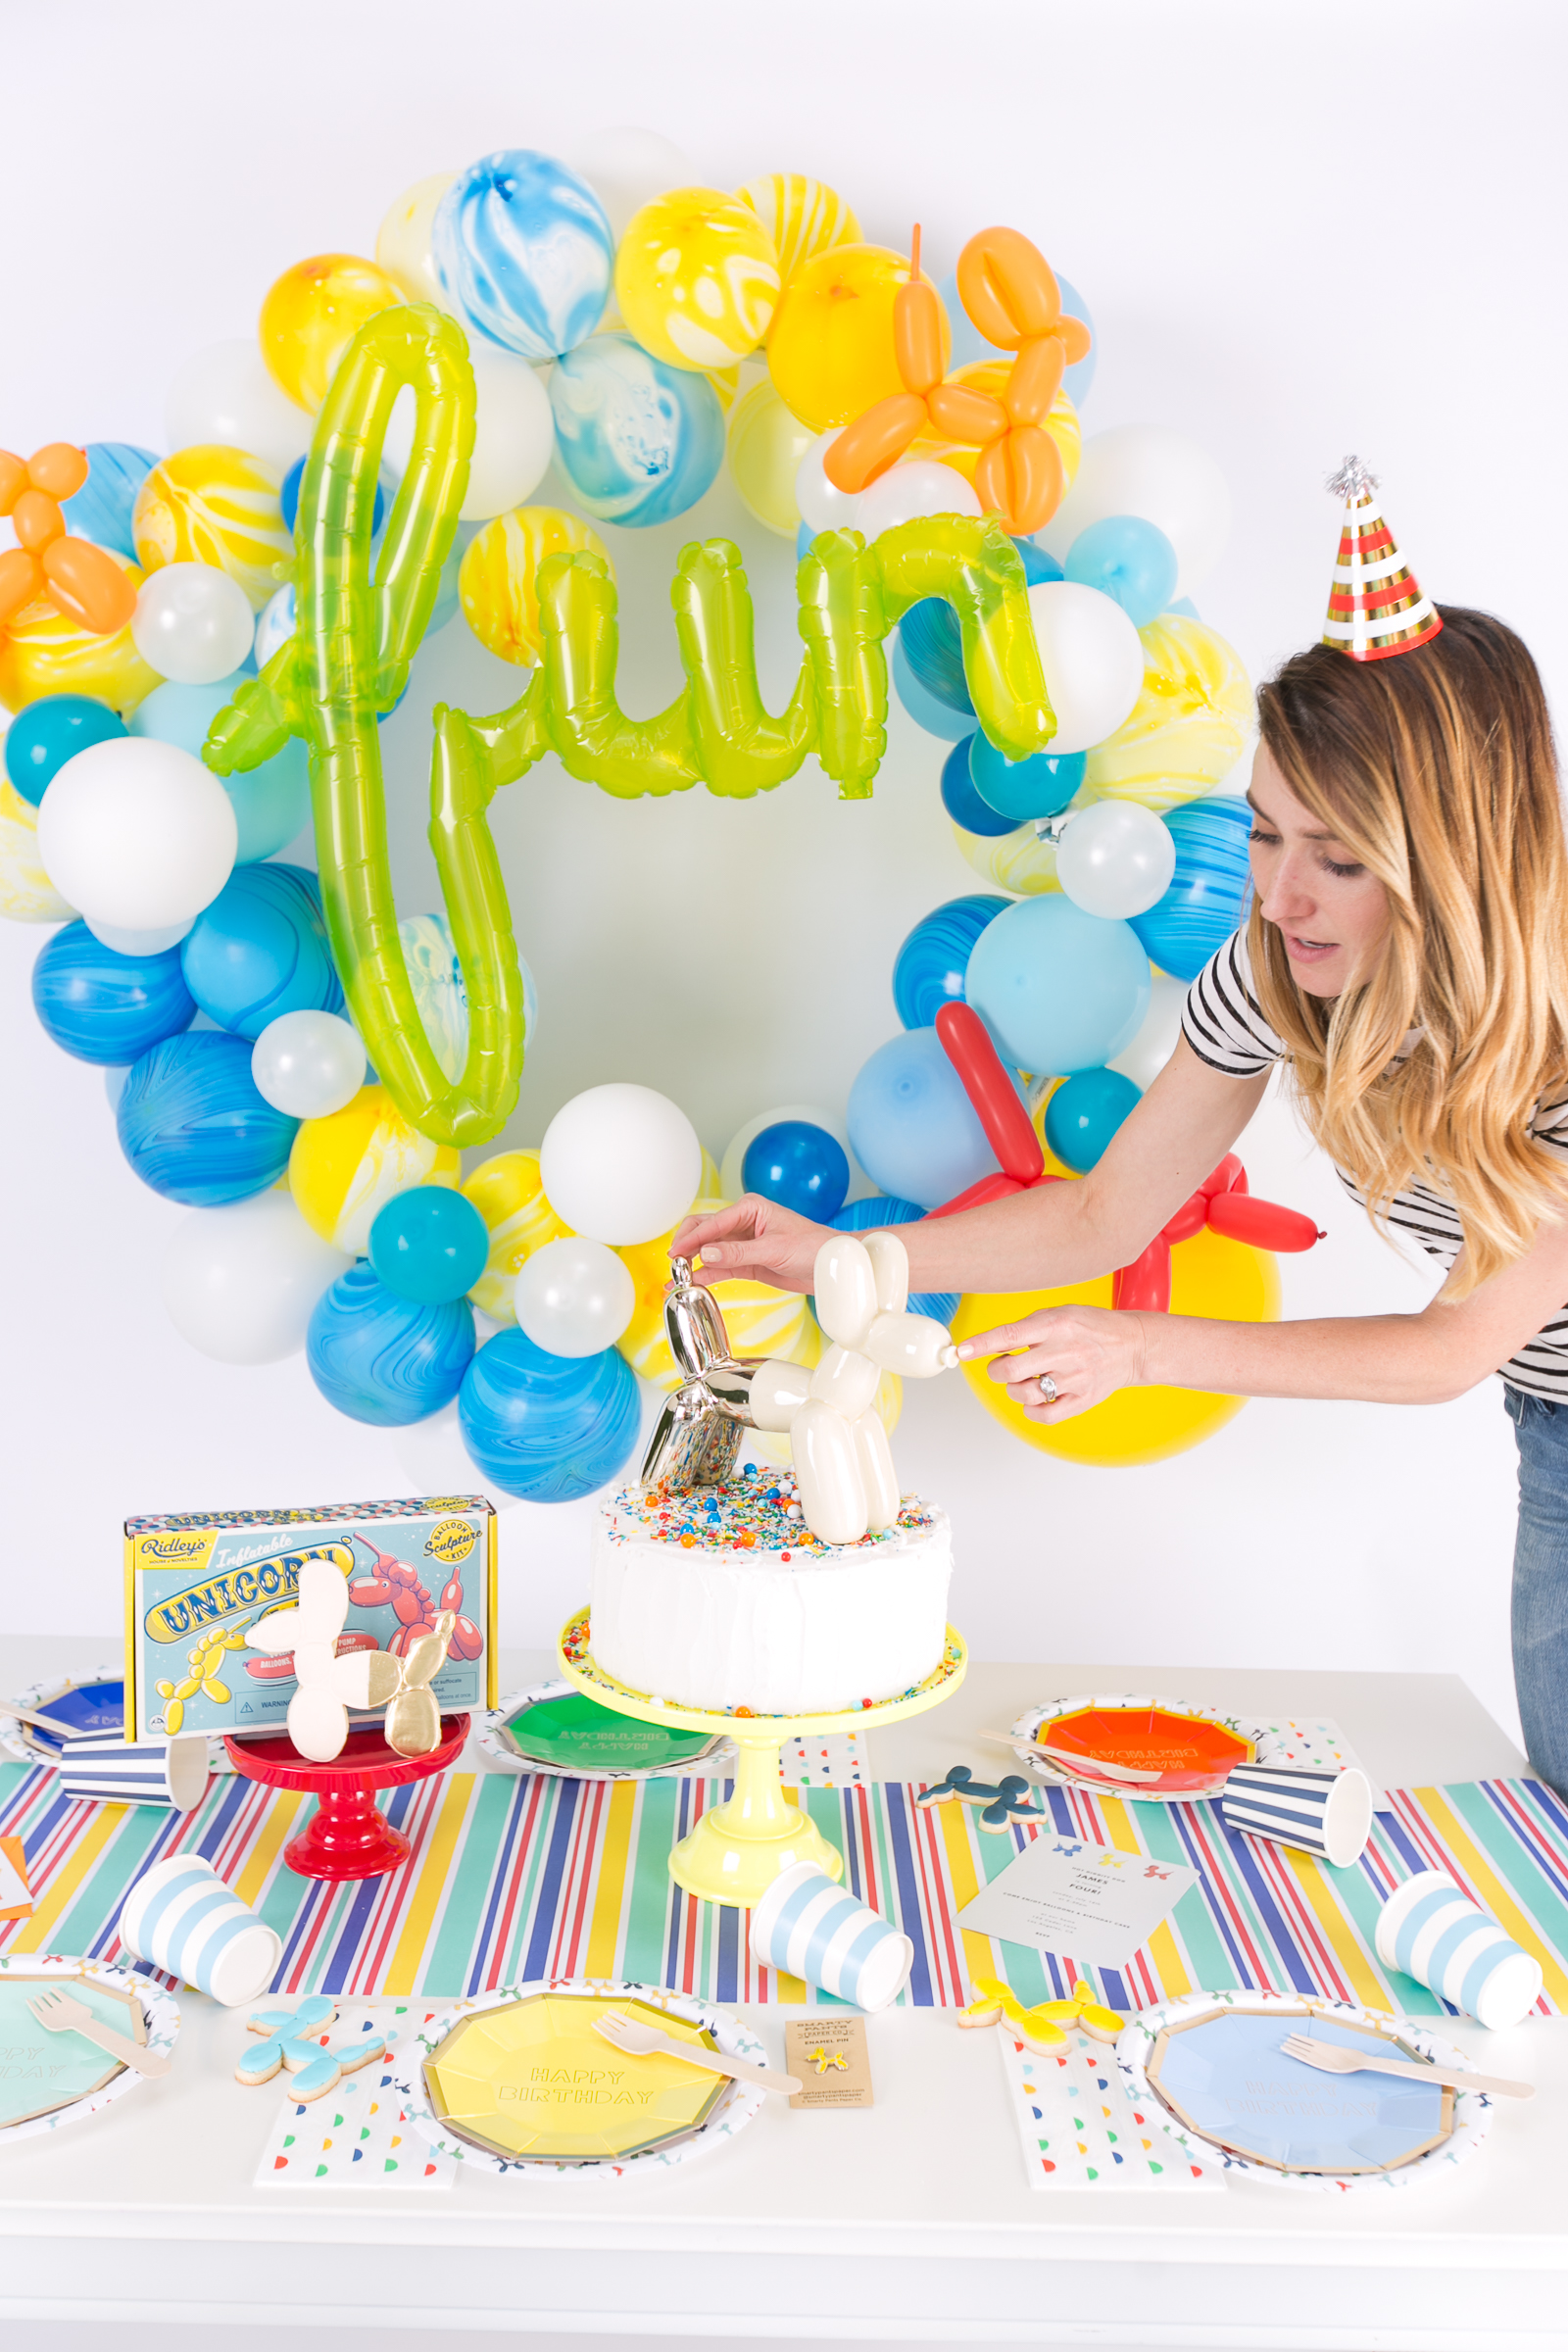 Balloon Animal Party Cake